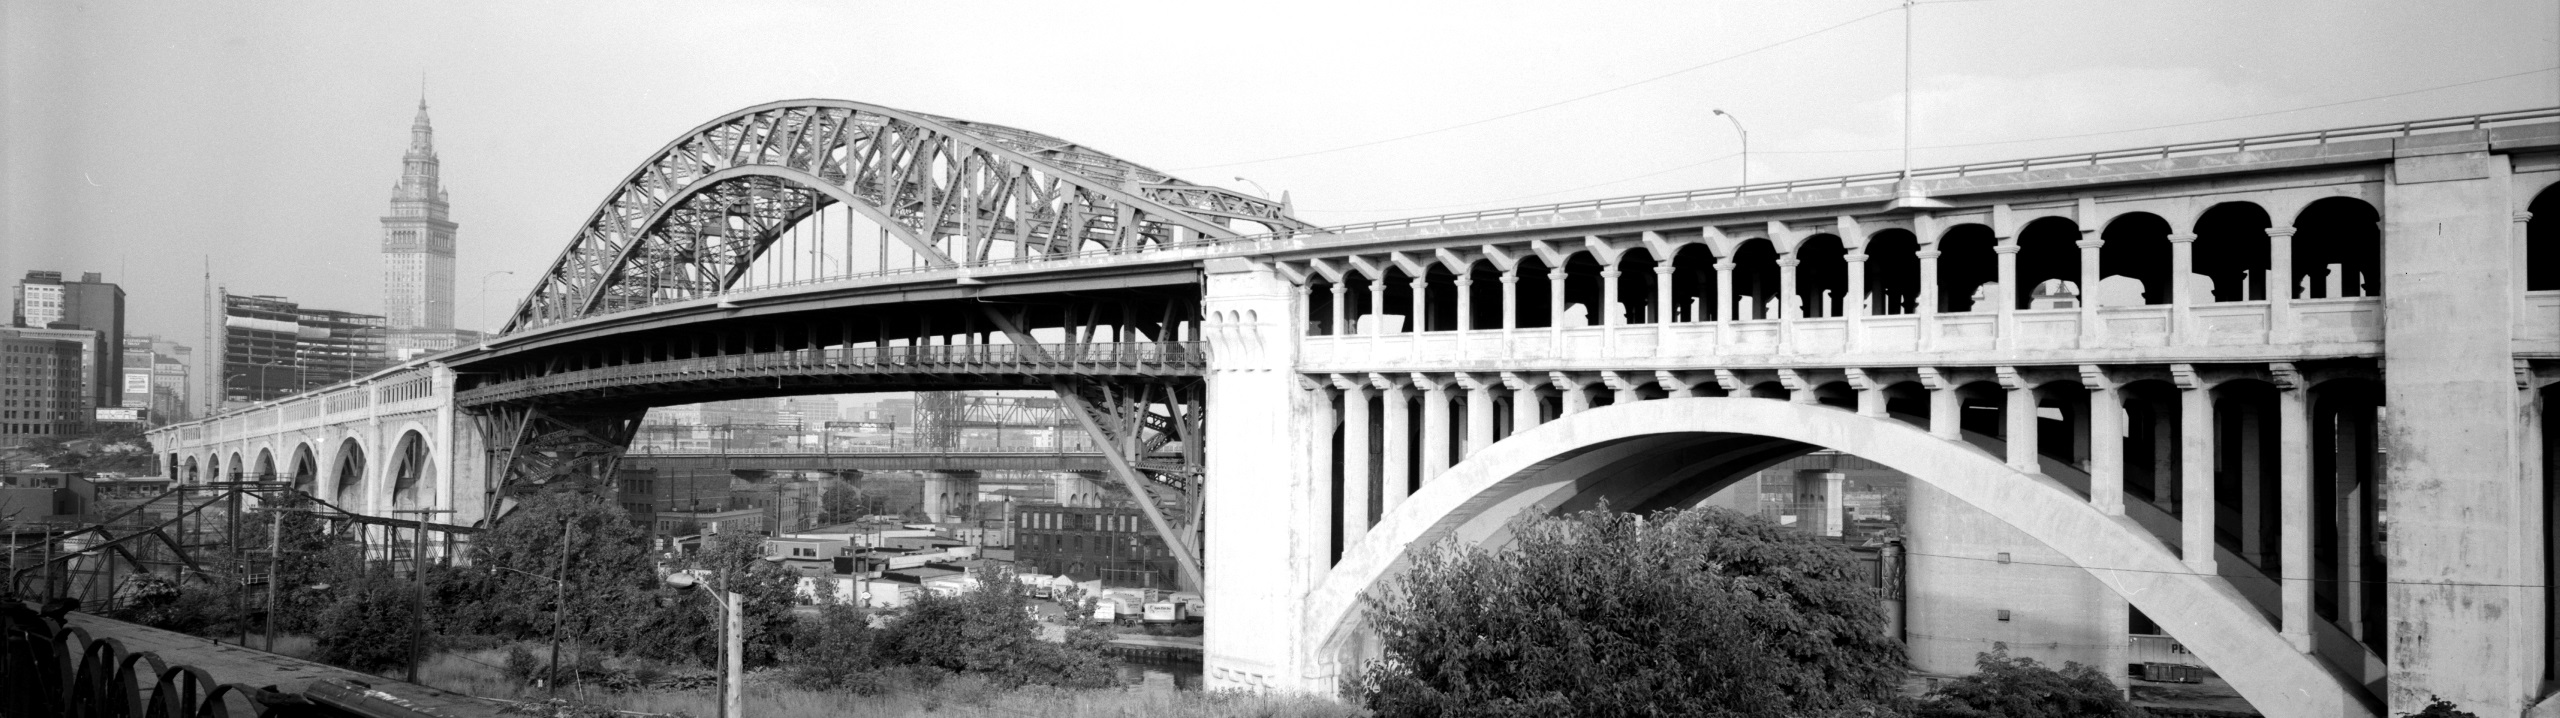 Detroit-Superior Bridge, Cleveland, OH